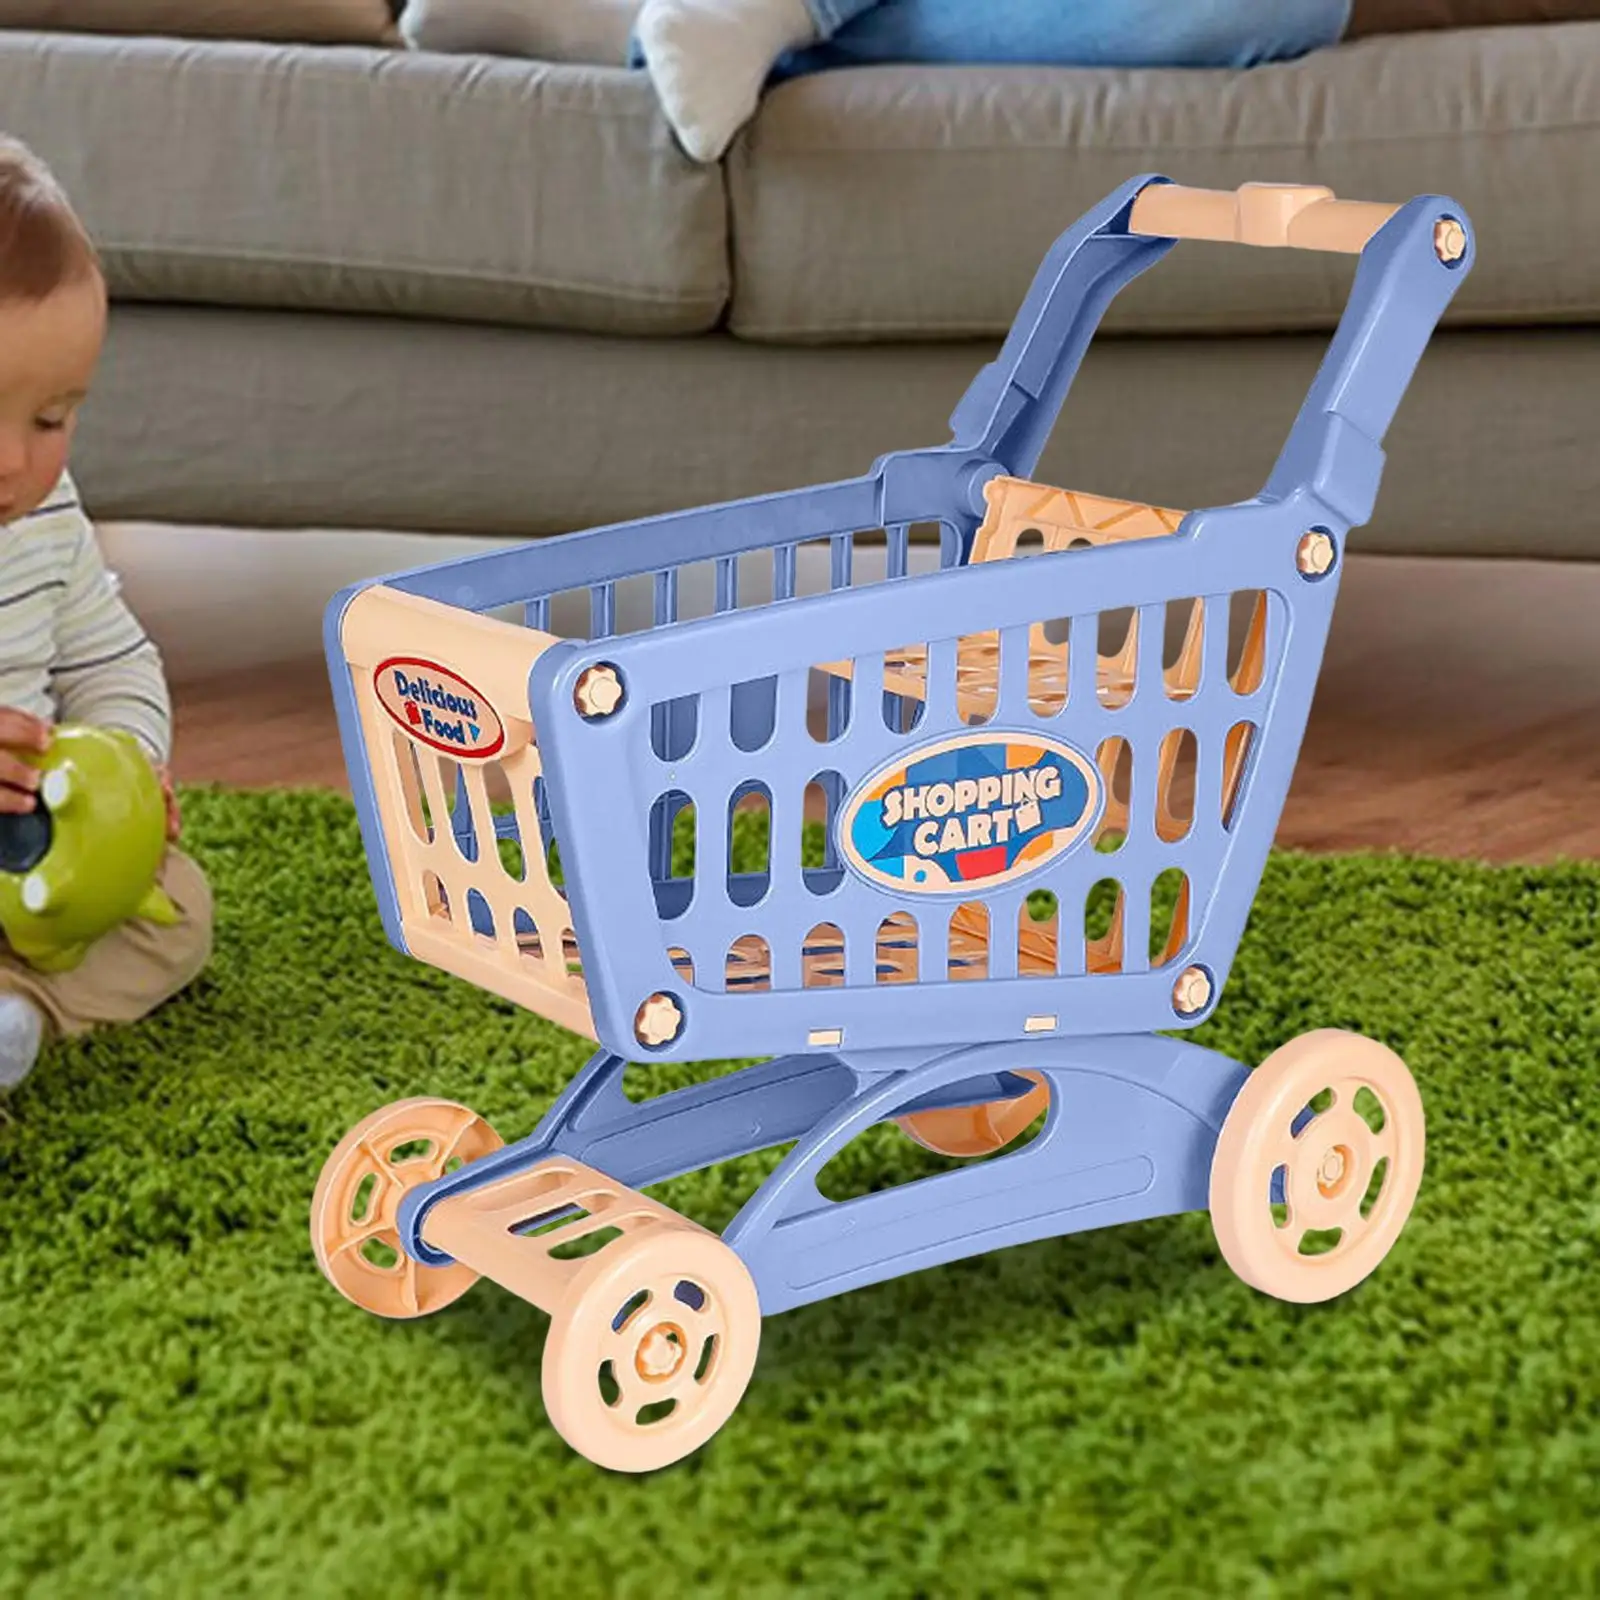 Simulation Shopping Cart for Preschool Learning Development Creative Toys